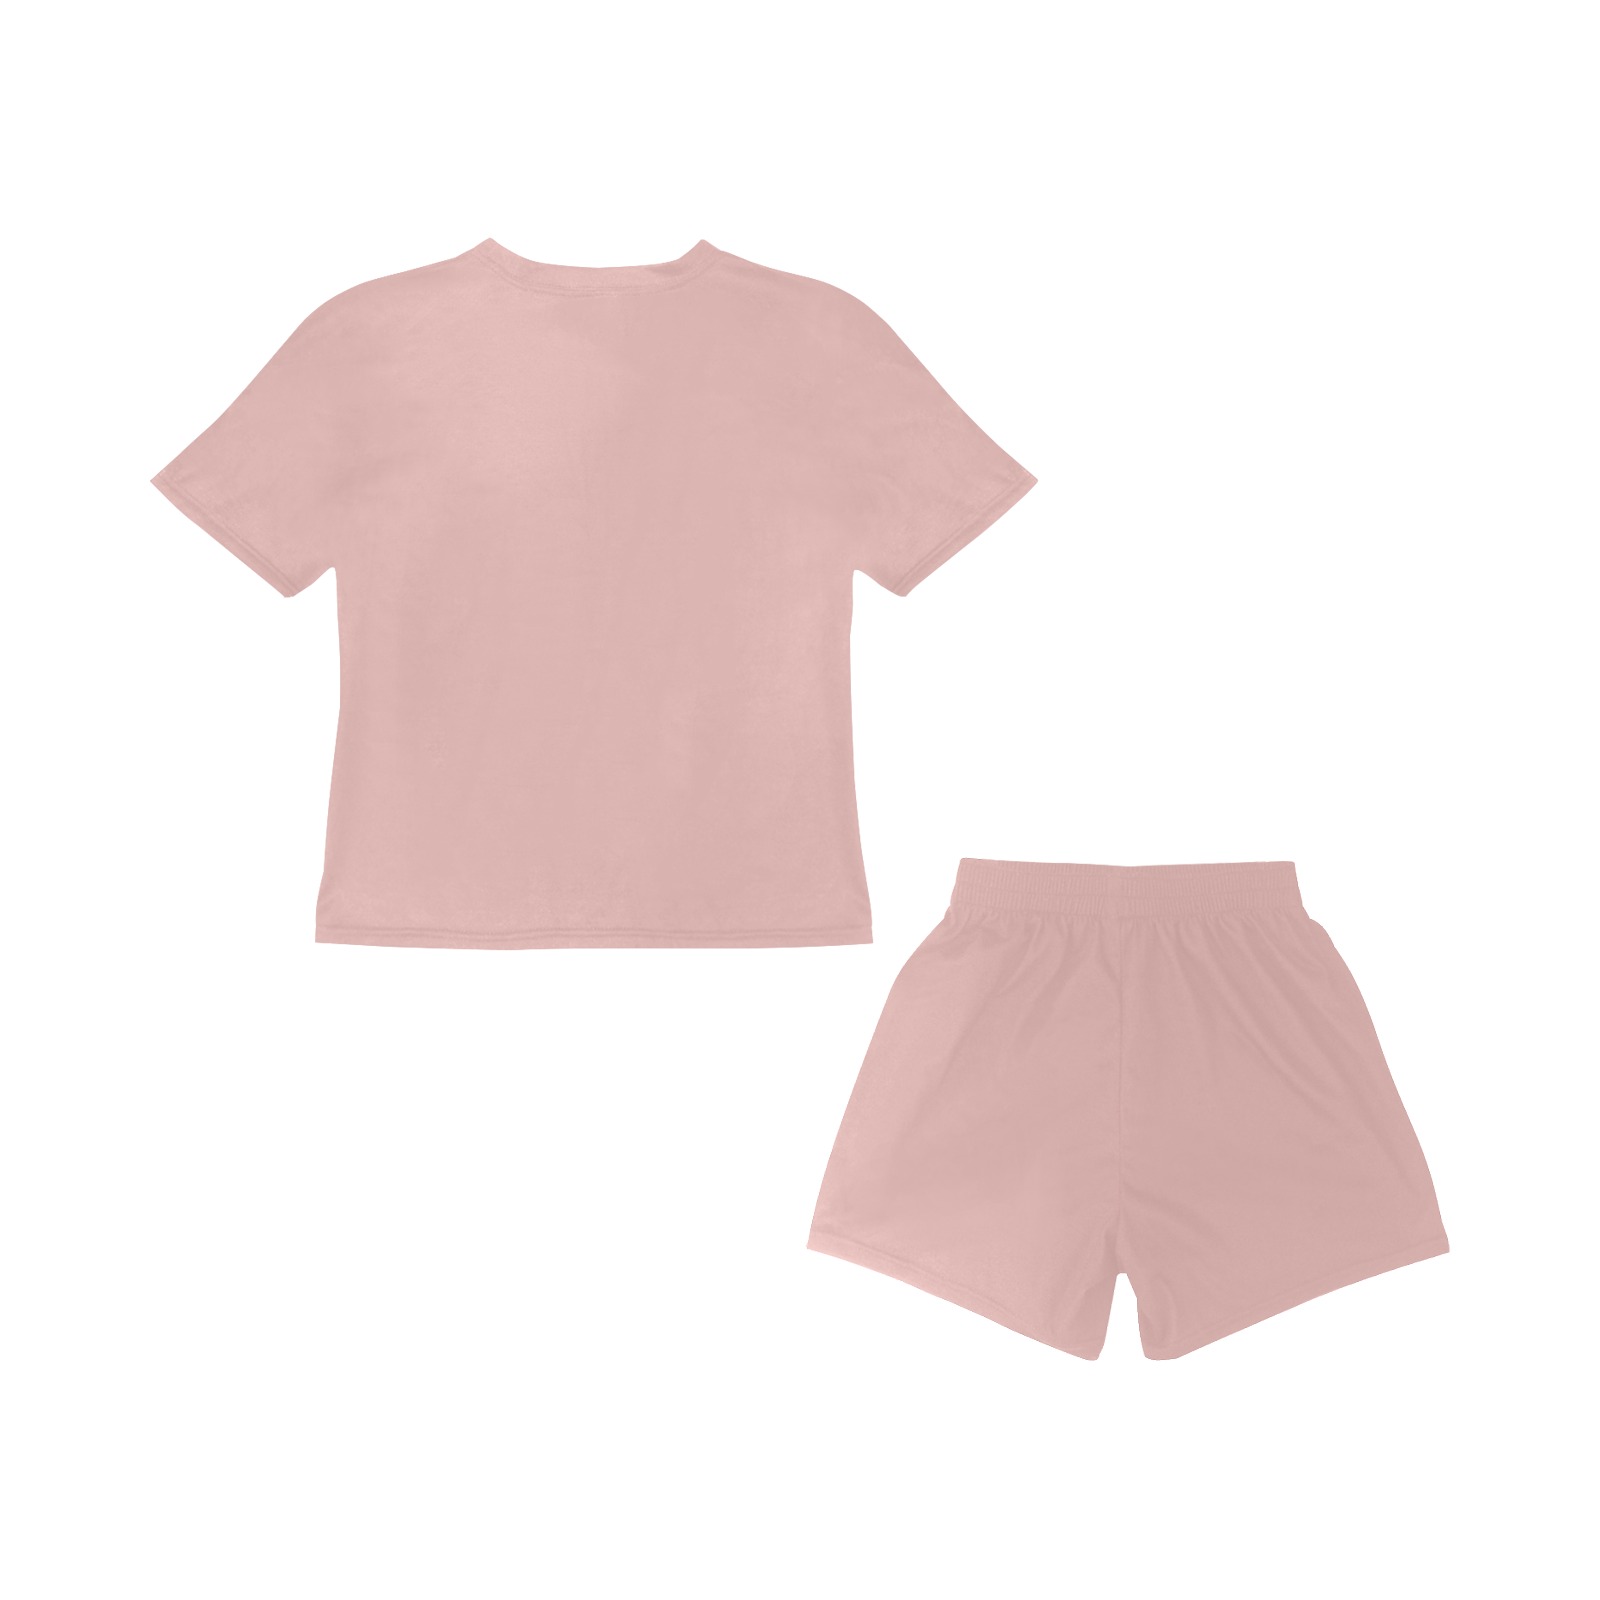 Gossamer Pink Big Girls' Short Pajama Set